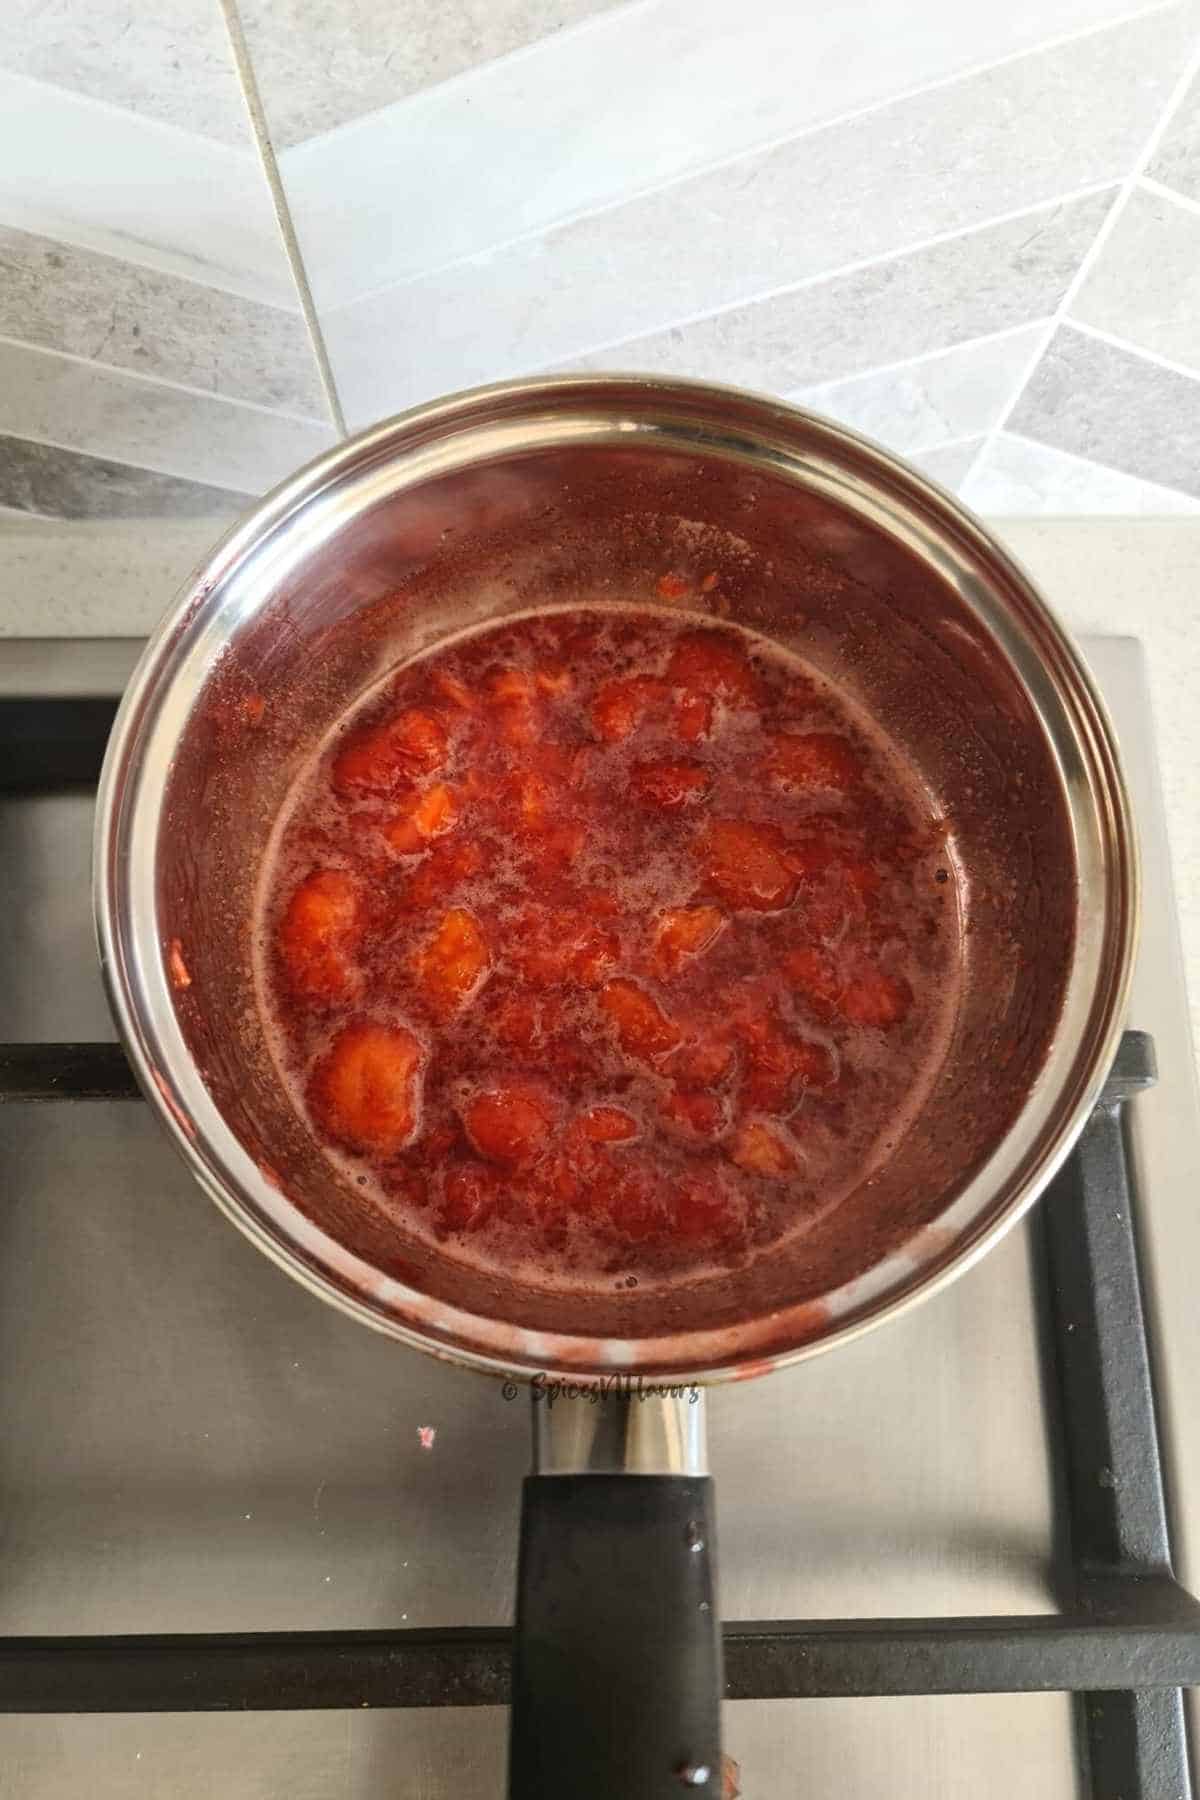 strawberries soften upon cooking